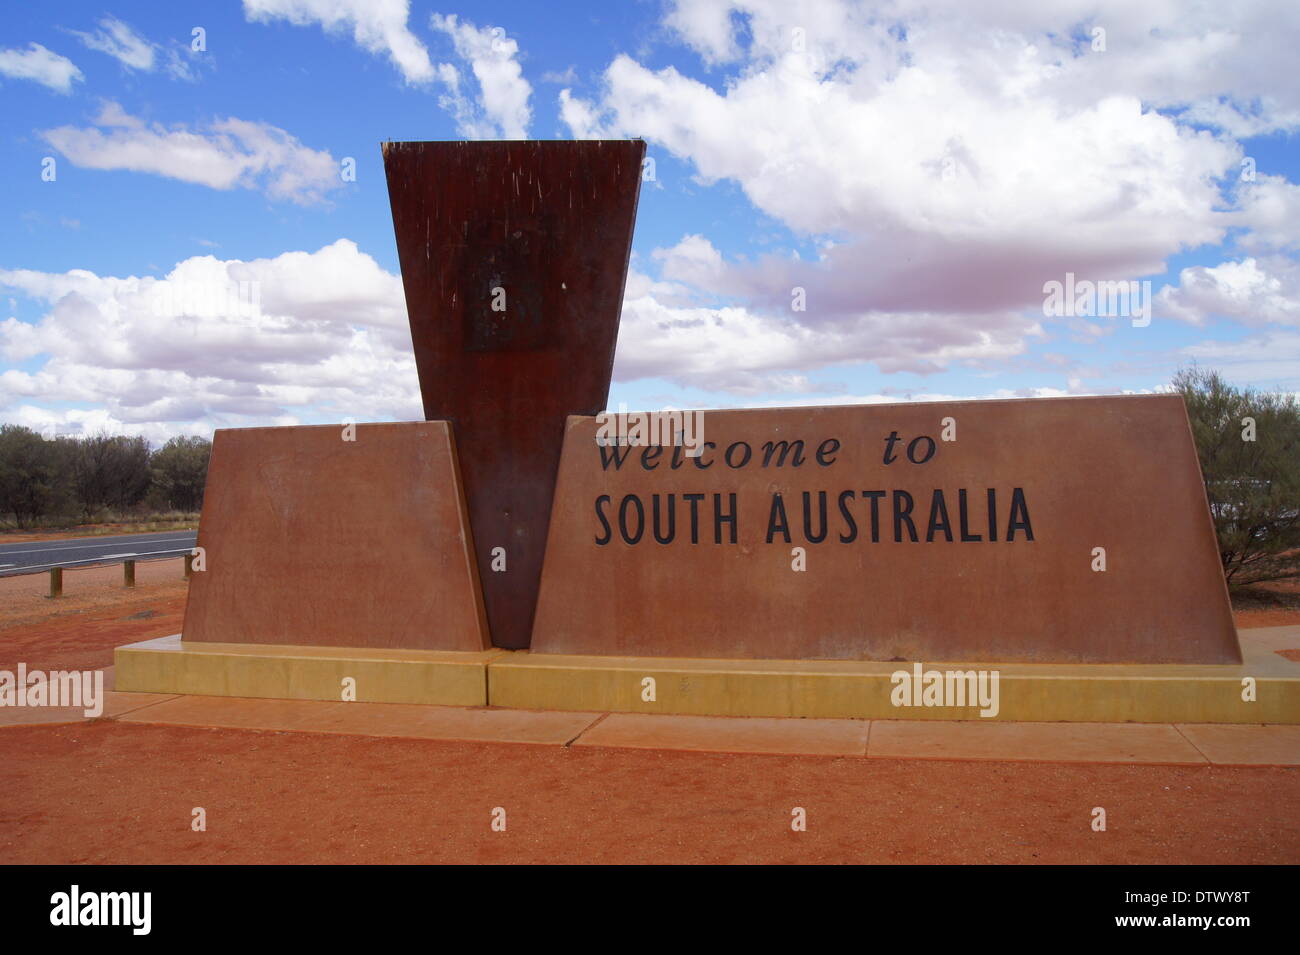 welcome to south australia Stock Photo